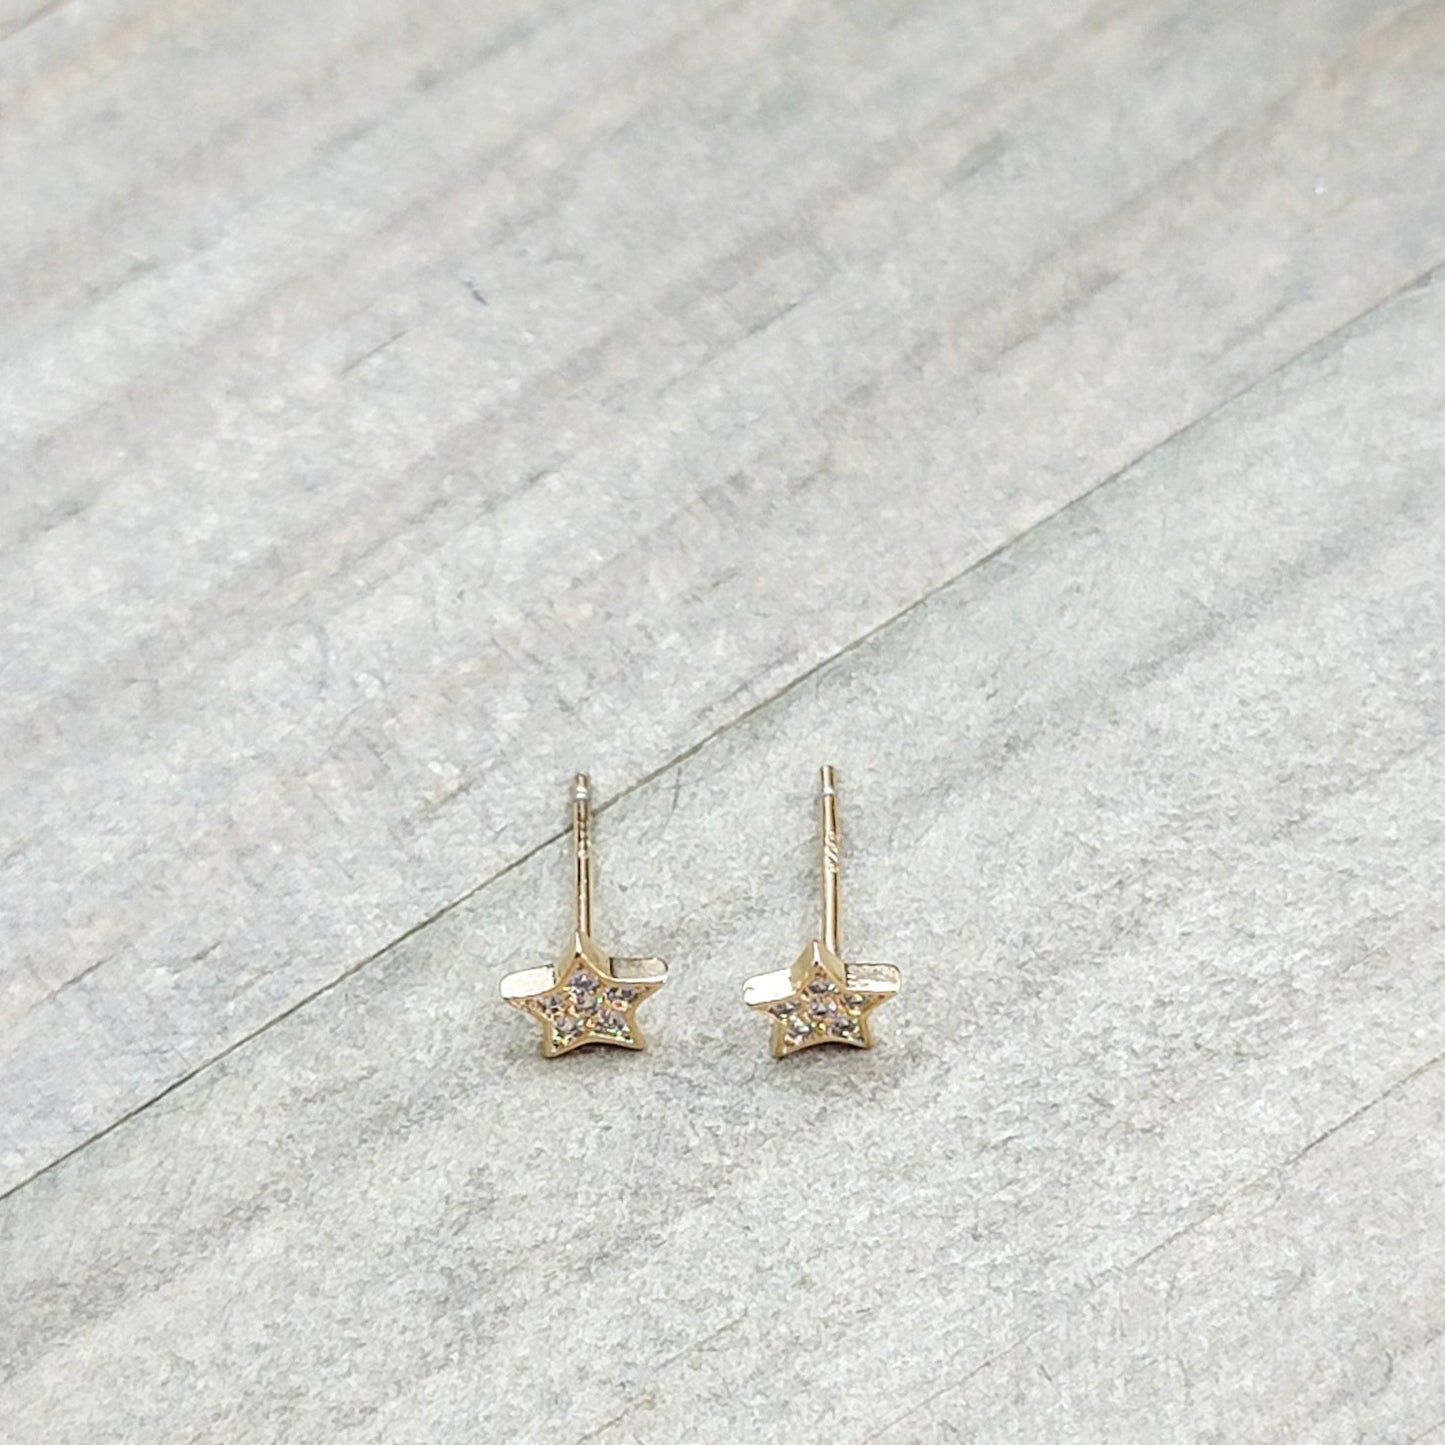 Tiny Gold Pave Star Stud Earrings - Nicki Lynn Jewelry